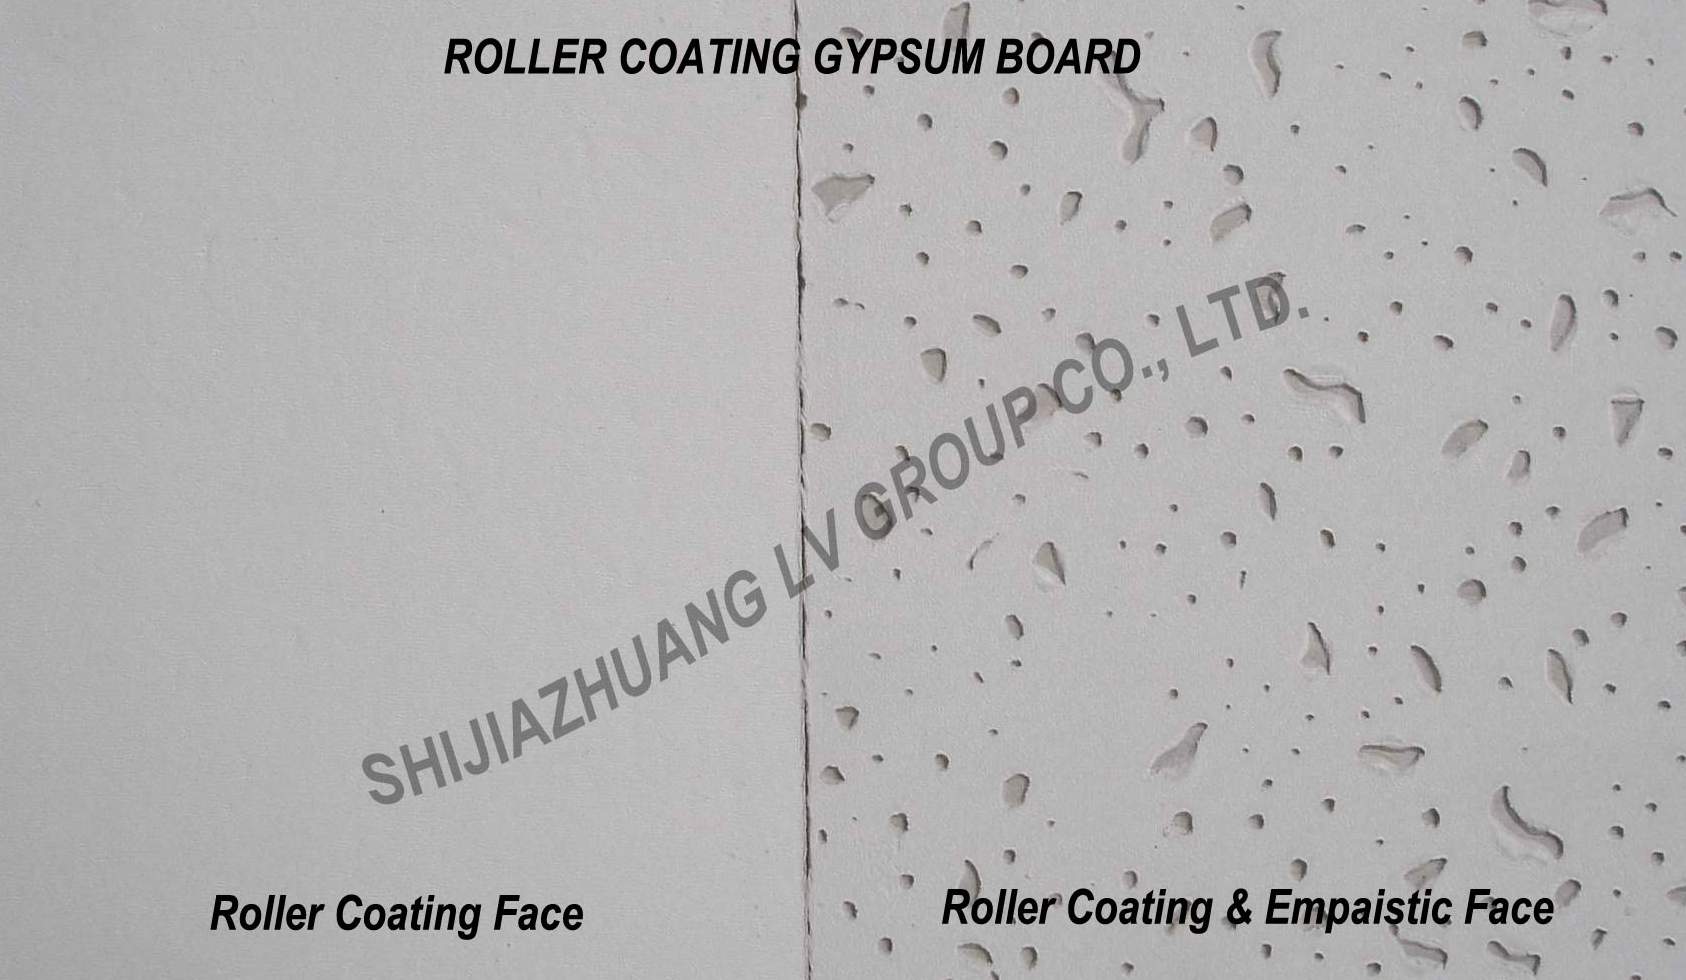 Roll-Painting Gypsum Board